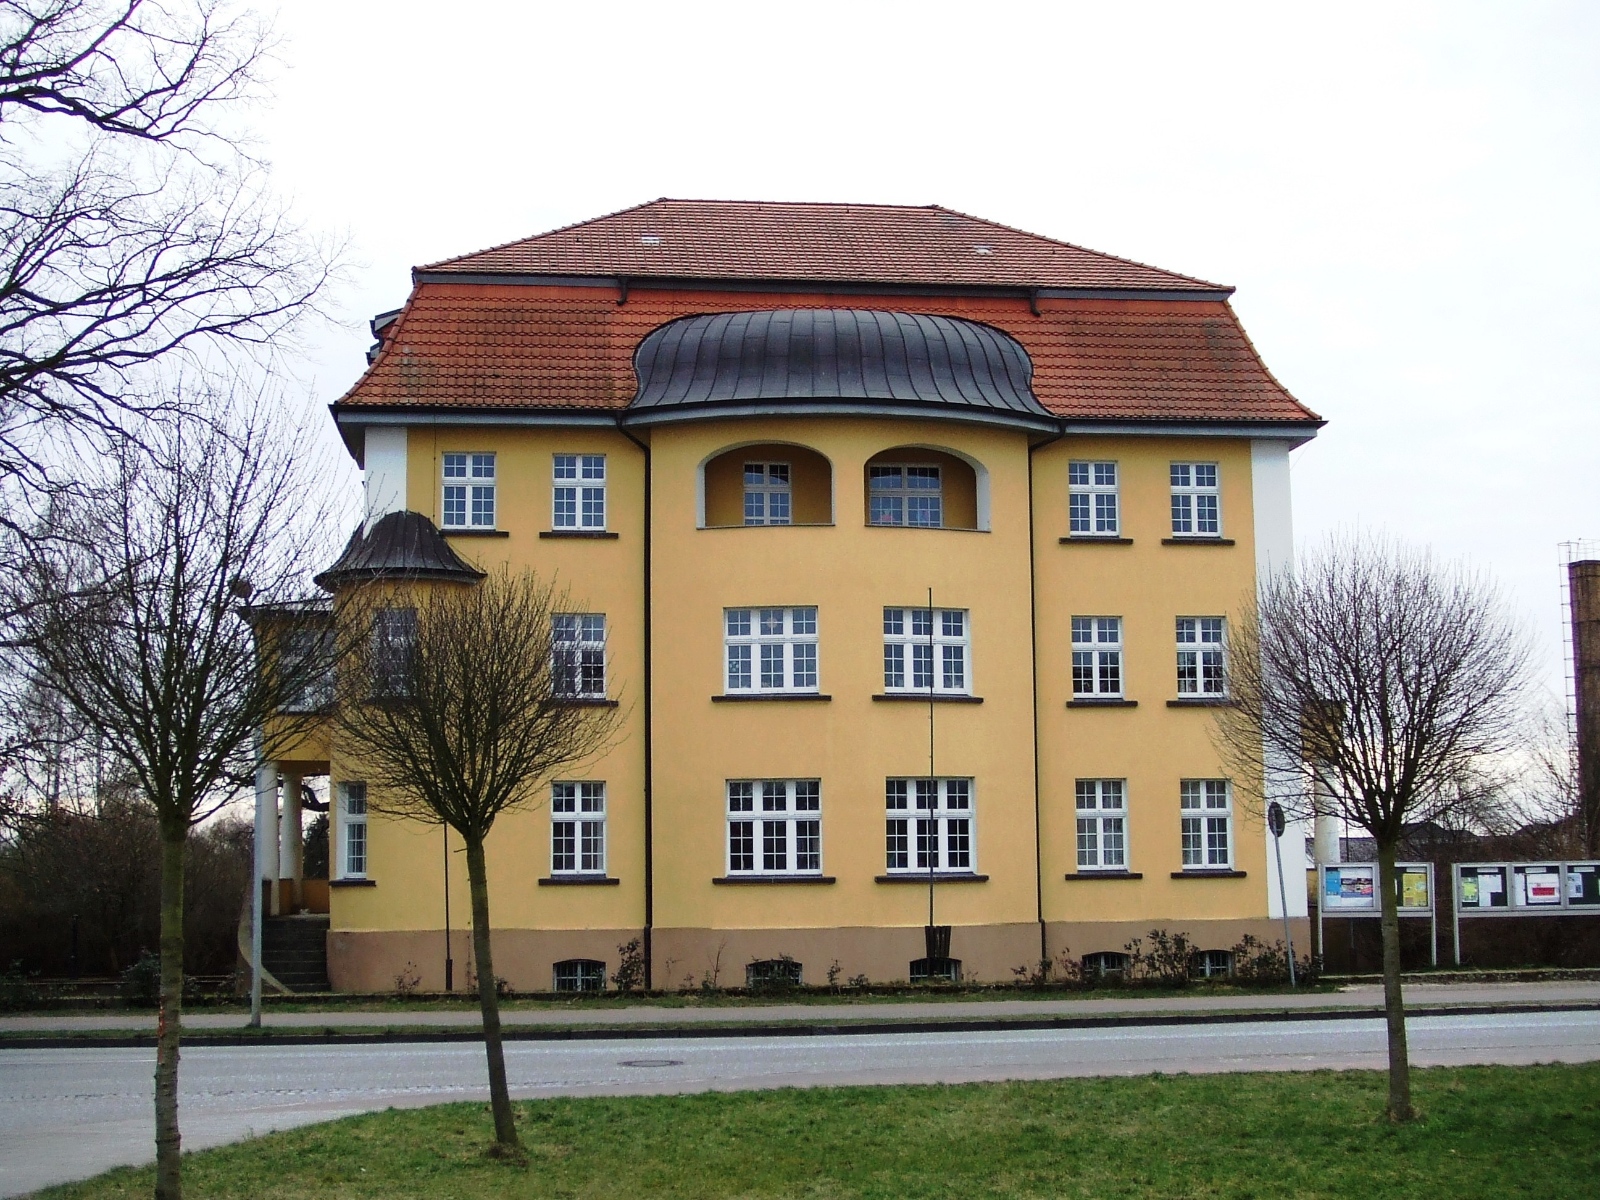 Amt Neustadt-Dosse, Av Matcar - Eget arbete, CC BY-SA 3.0, https://commons.wikimedia.org/w/index.php?curid=3699114